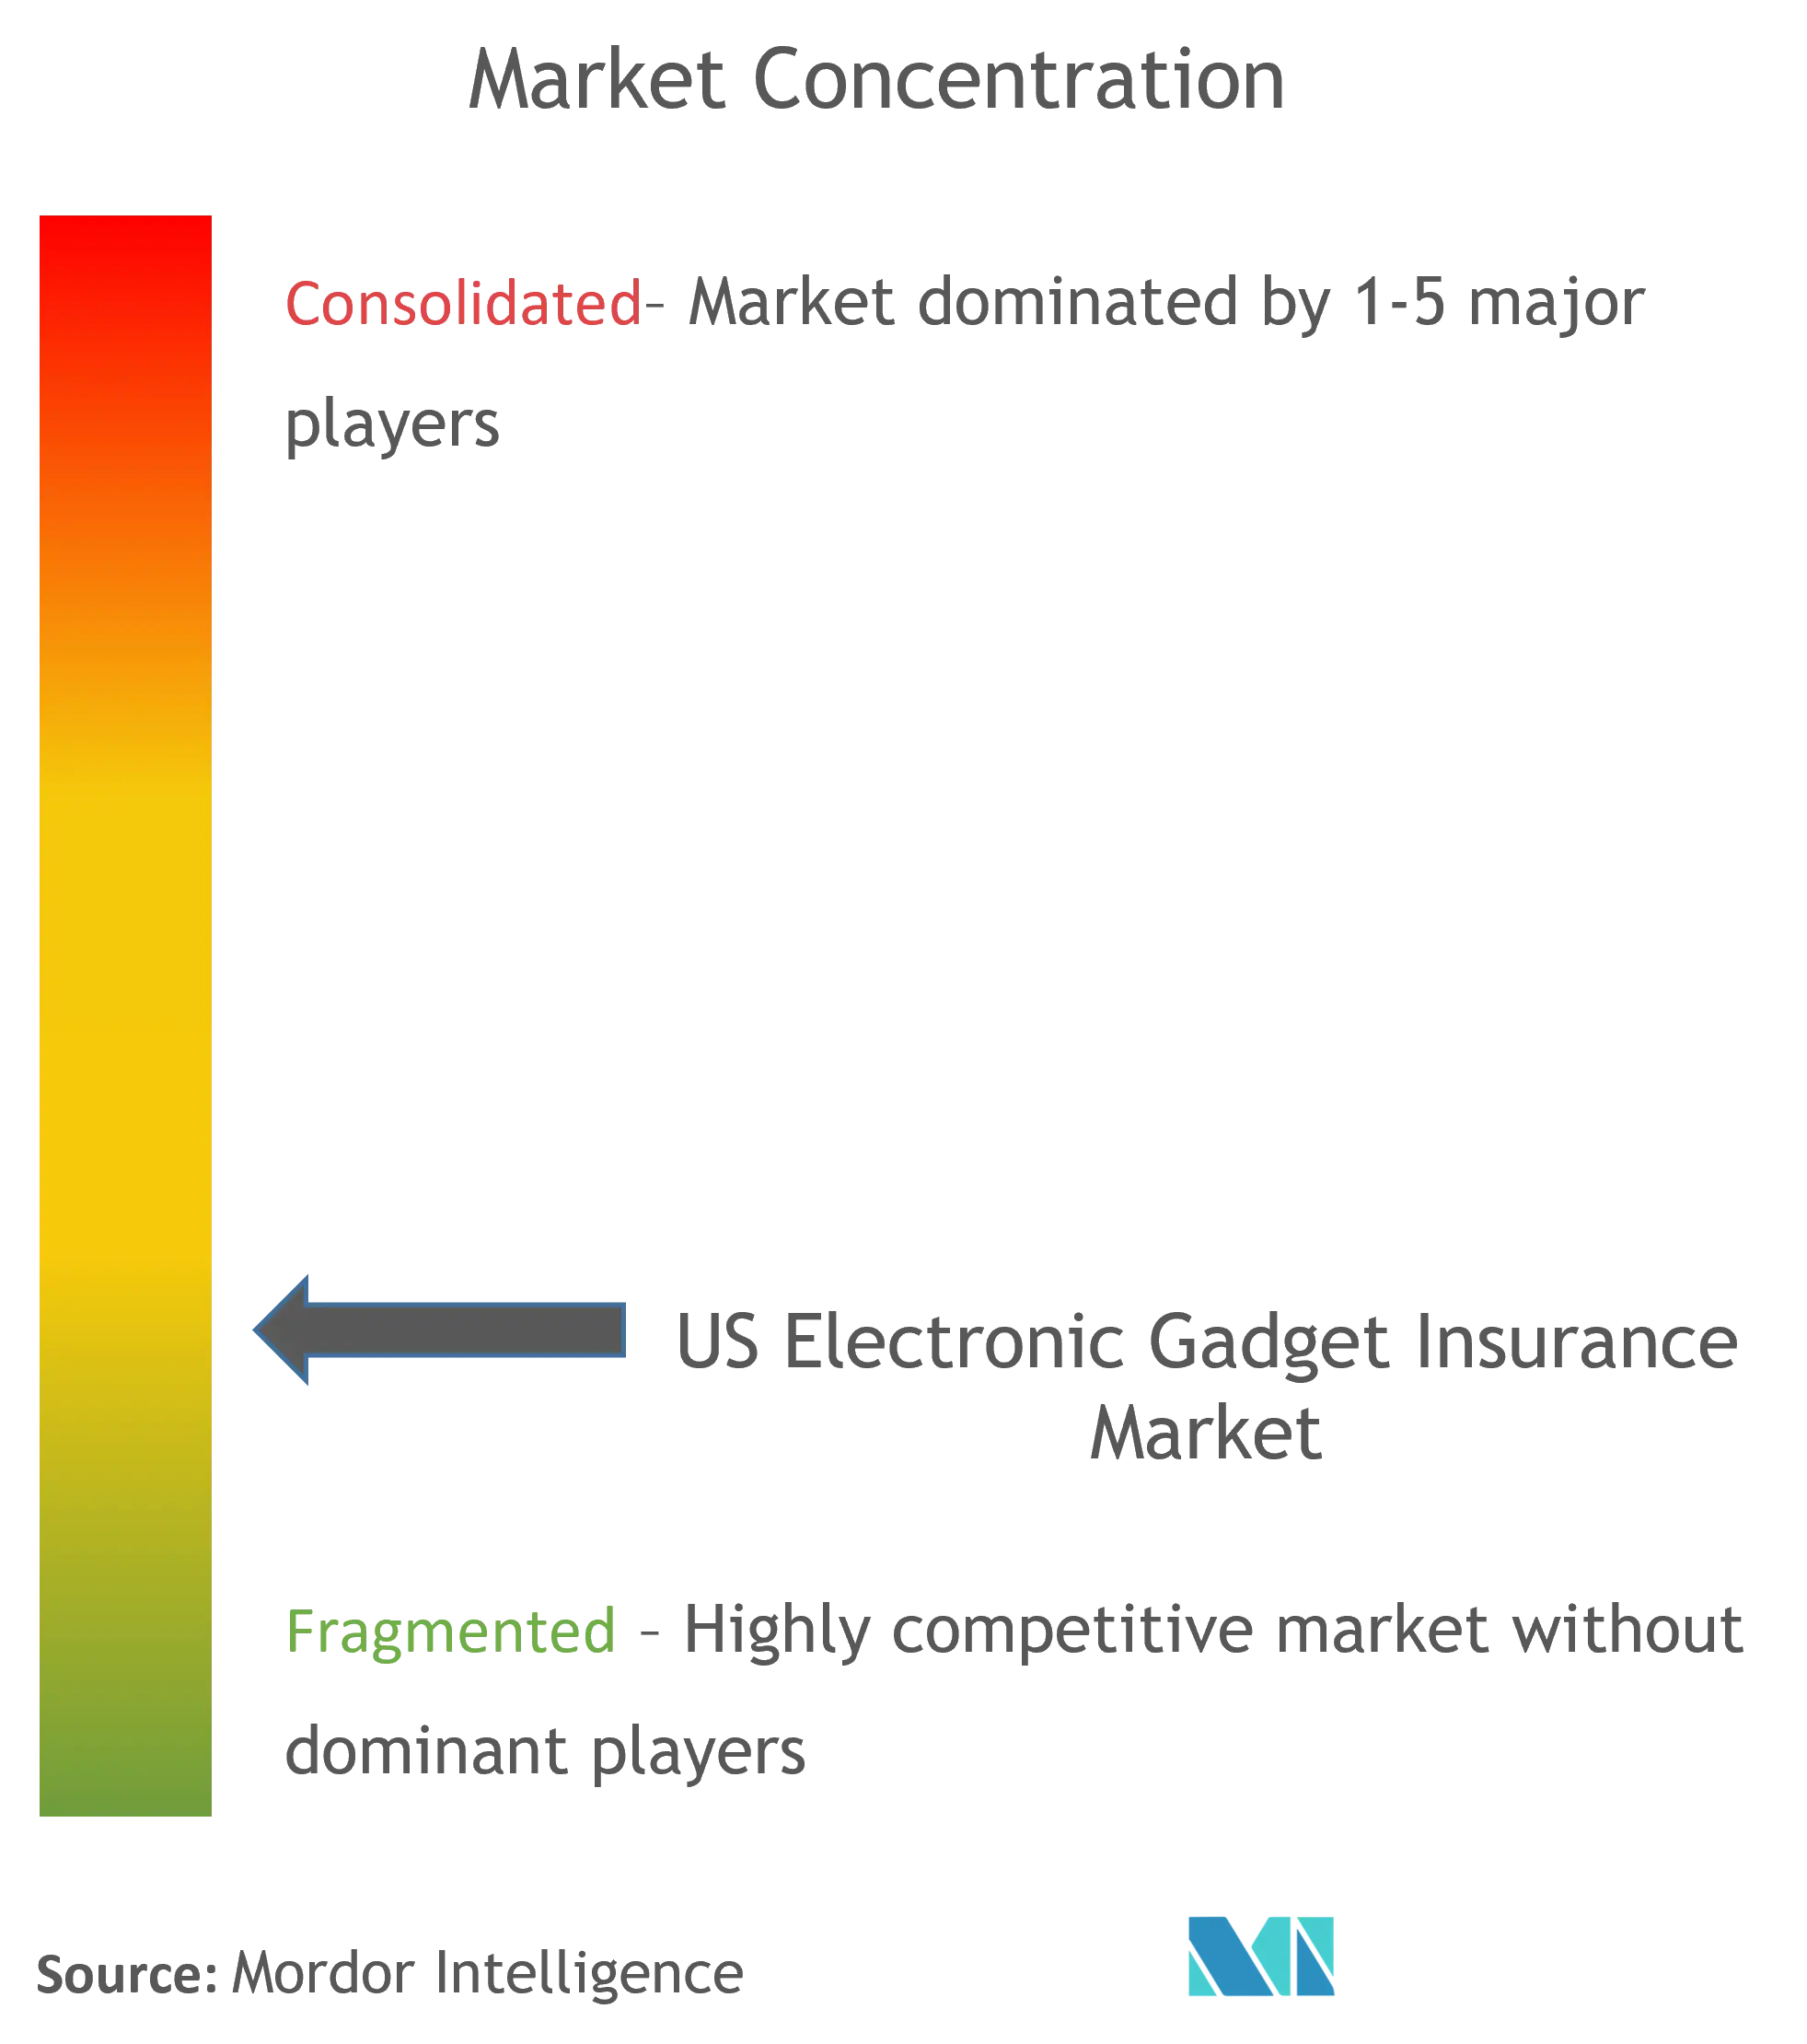 US Electronic Gadgets Insurance Market Concentration